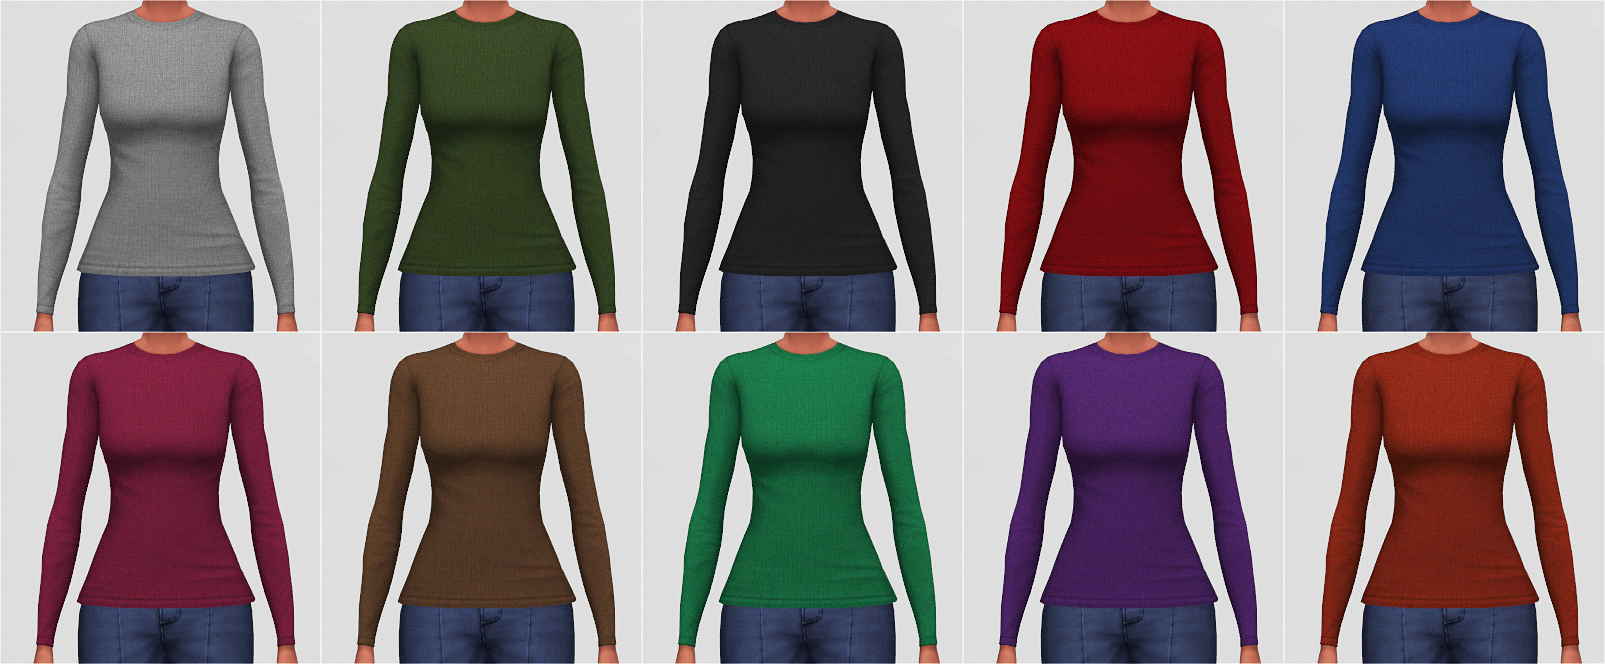 [Veranka] Tori Sweater - The Sims 4 Create a Sim - CurseForge